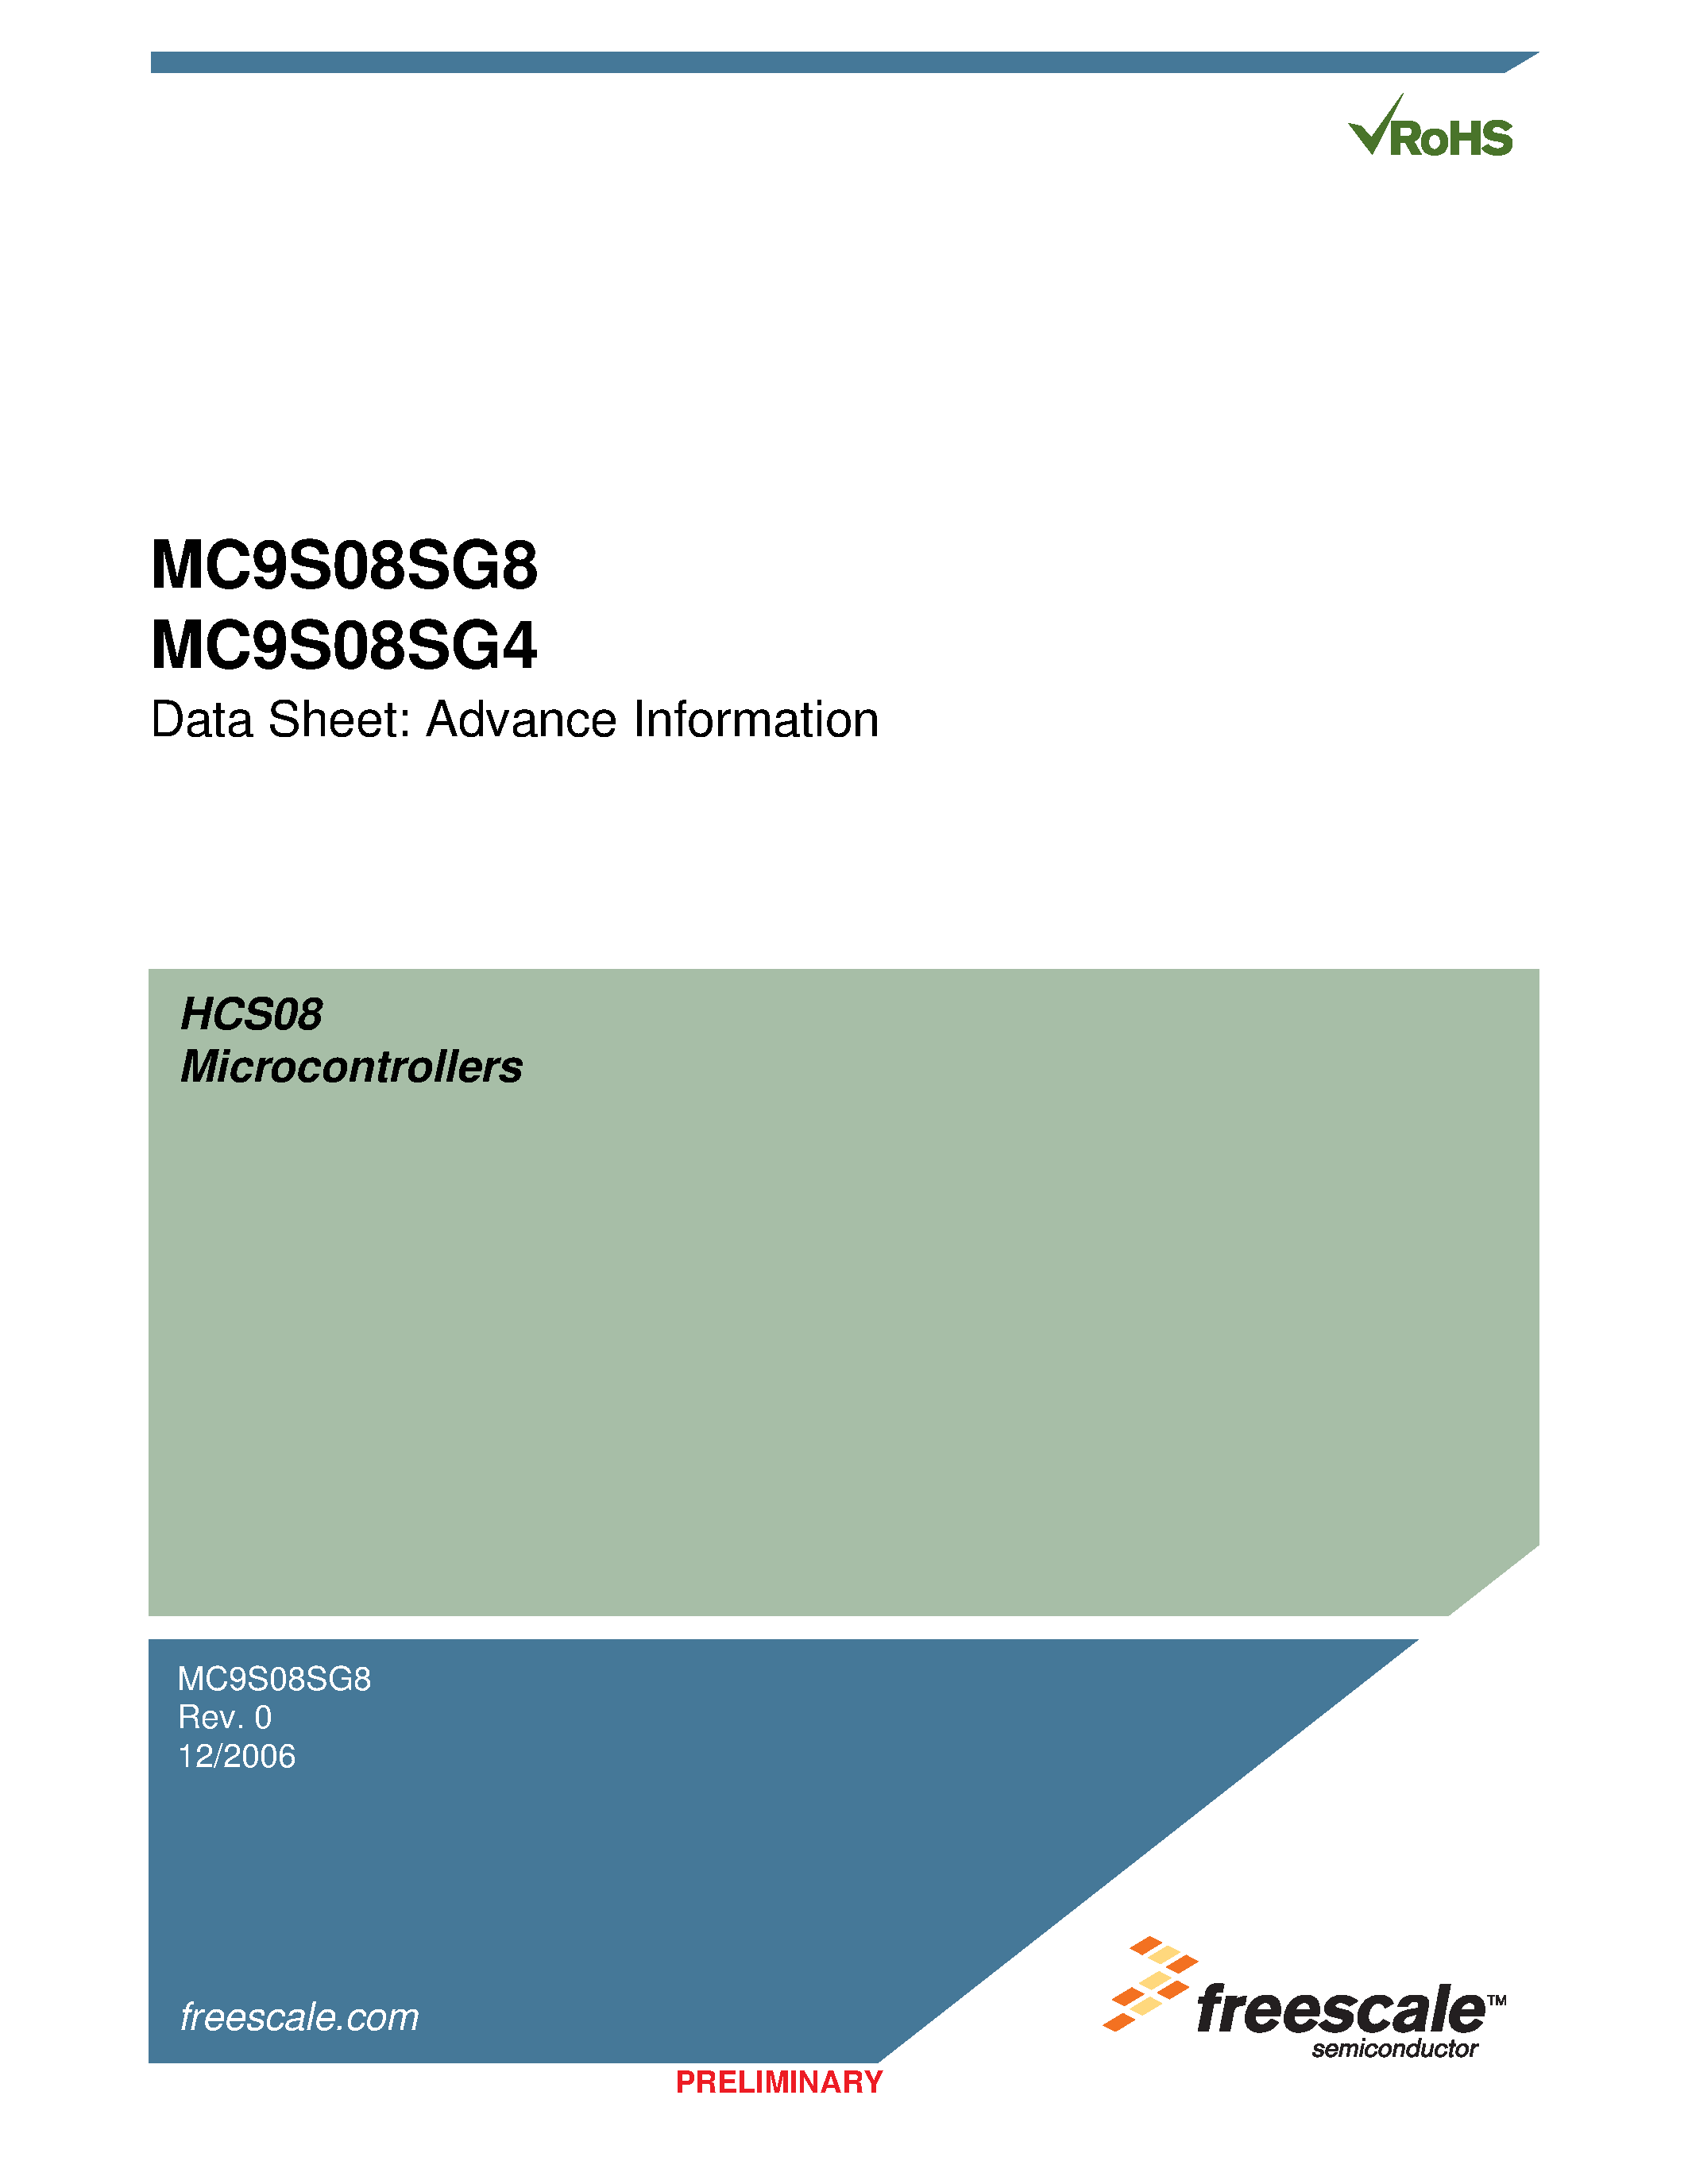 Datasheet MC9S08SG4 - (MC9S08SG4 / MC9S08SG8) Microcontrollers page 1